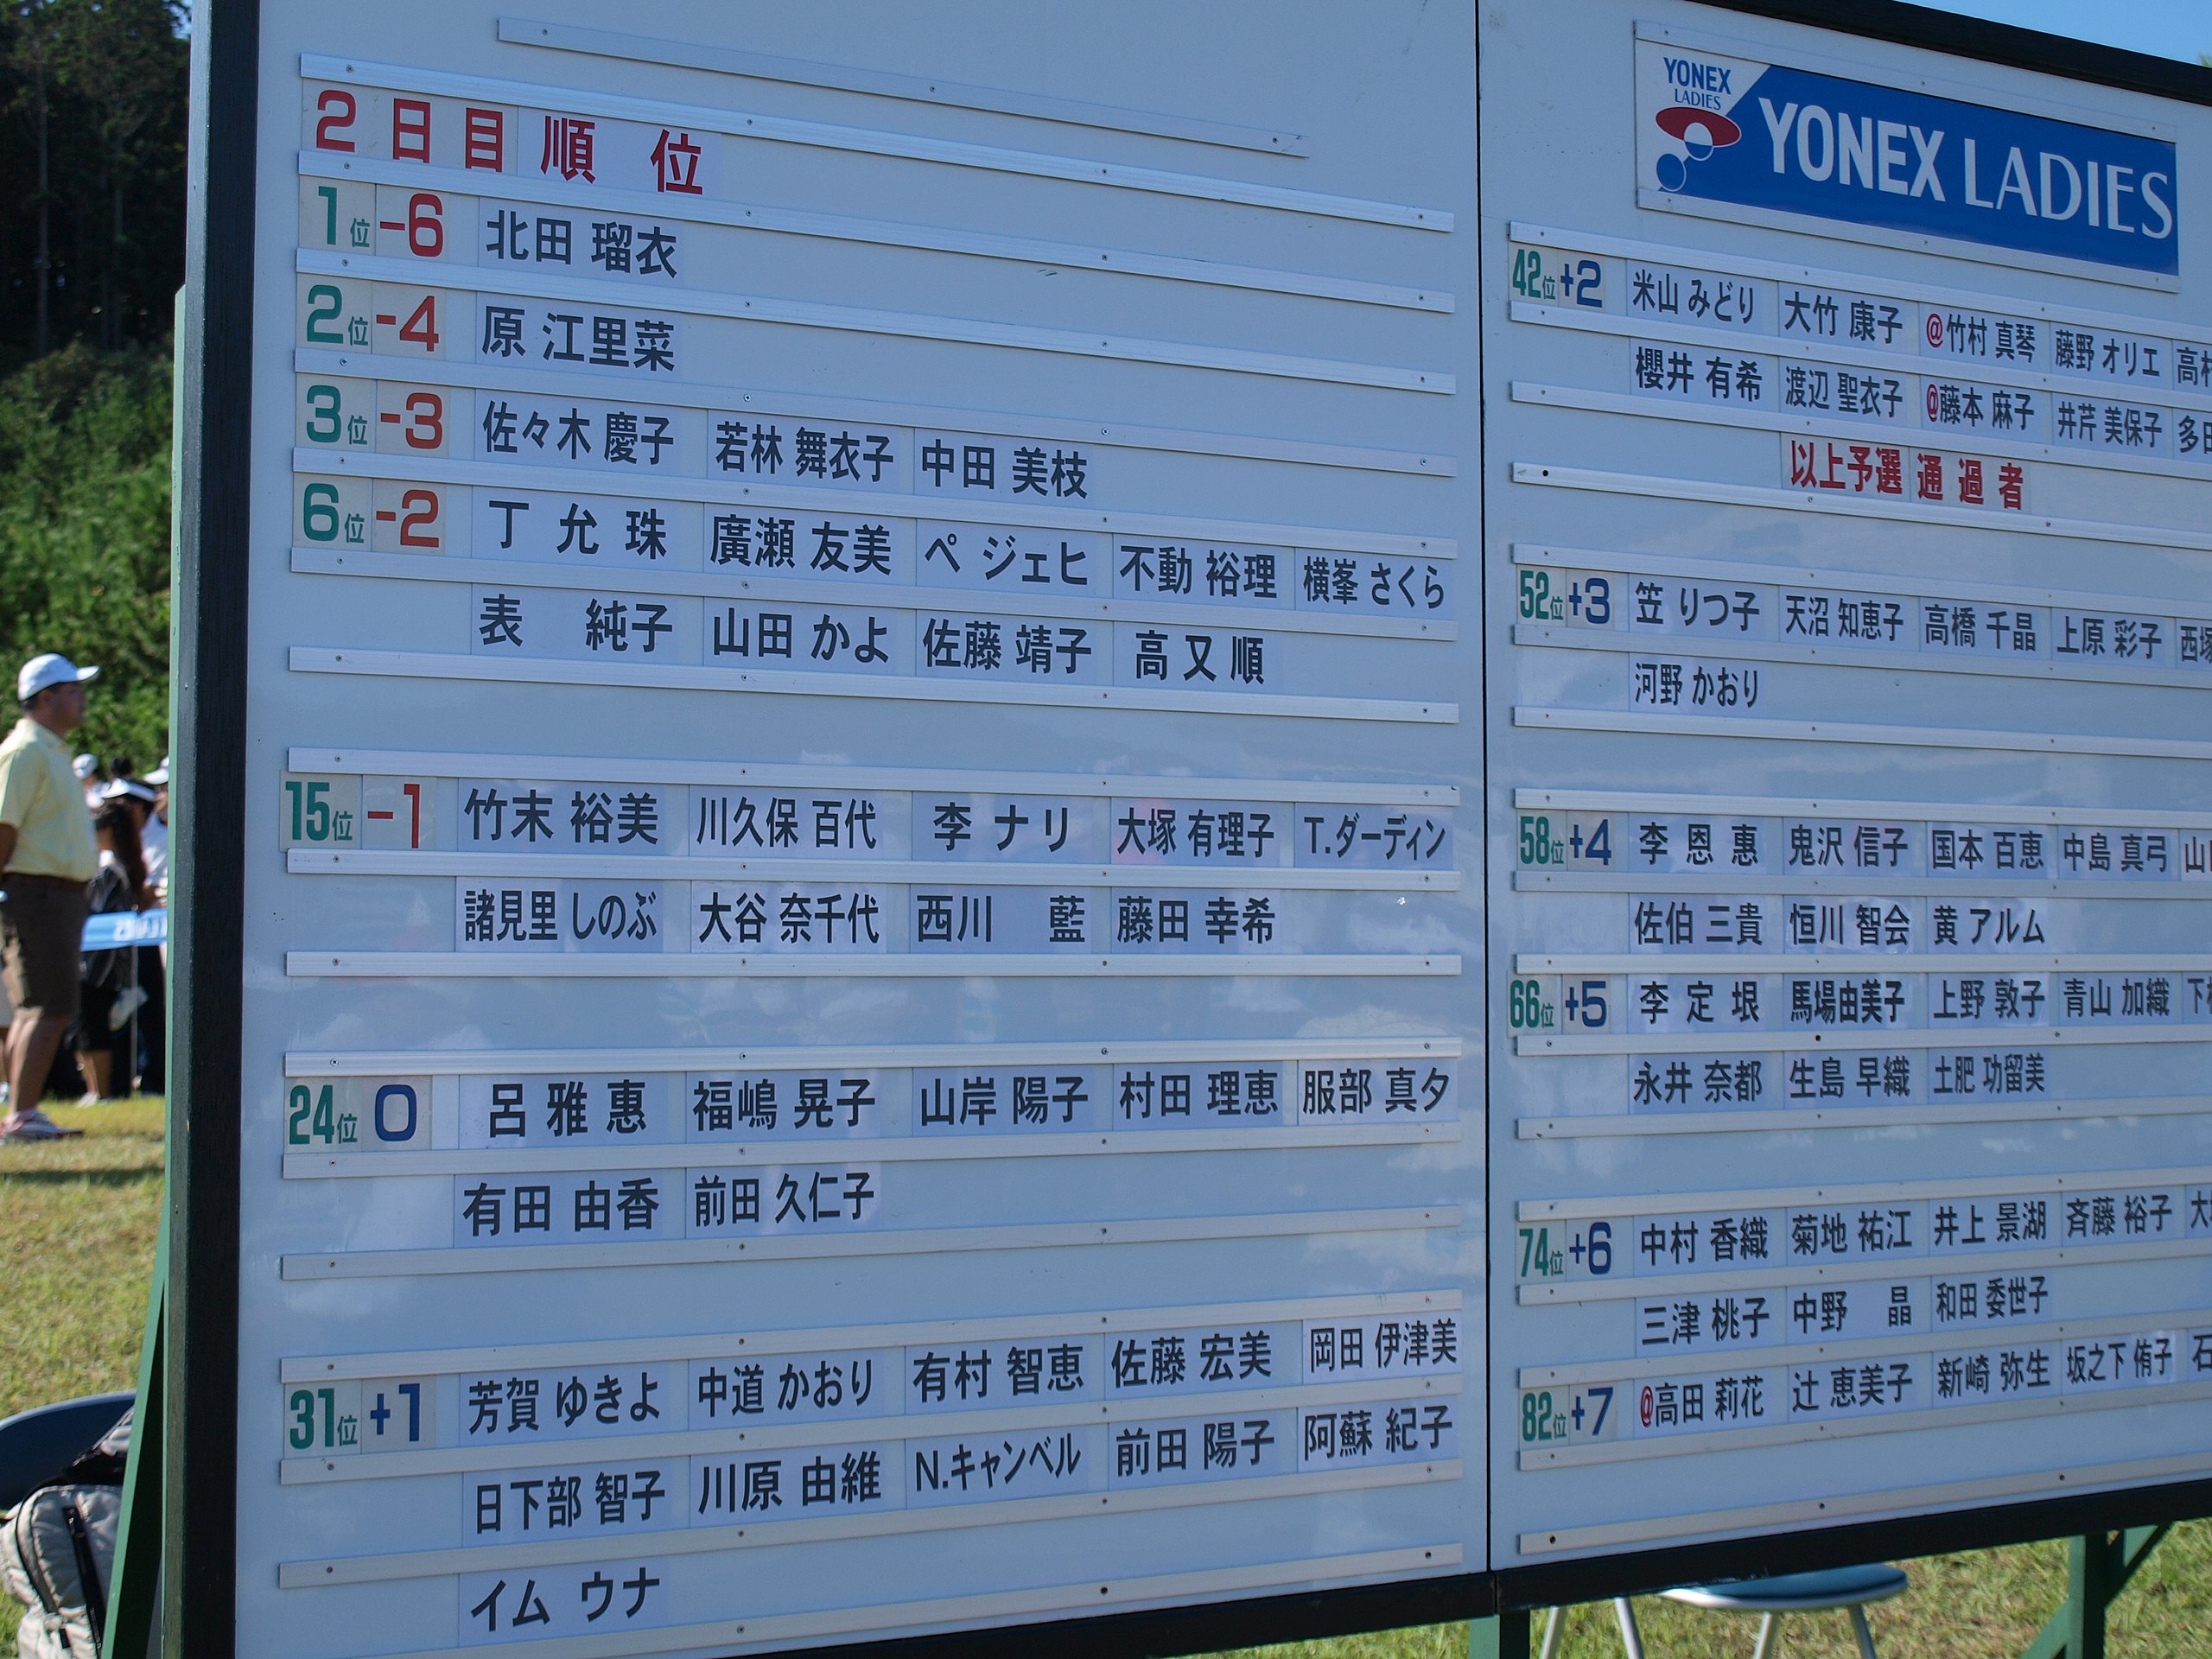 File Yonex Ladies Golf Tournament 08 04 Jpg Wikimedia Commons